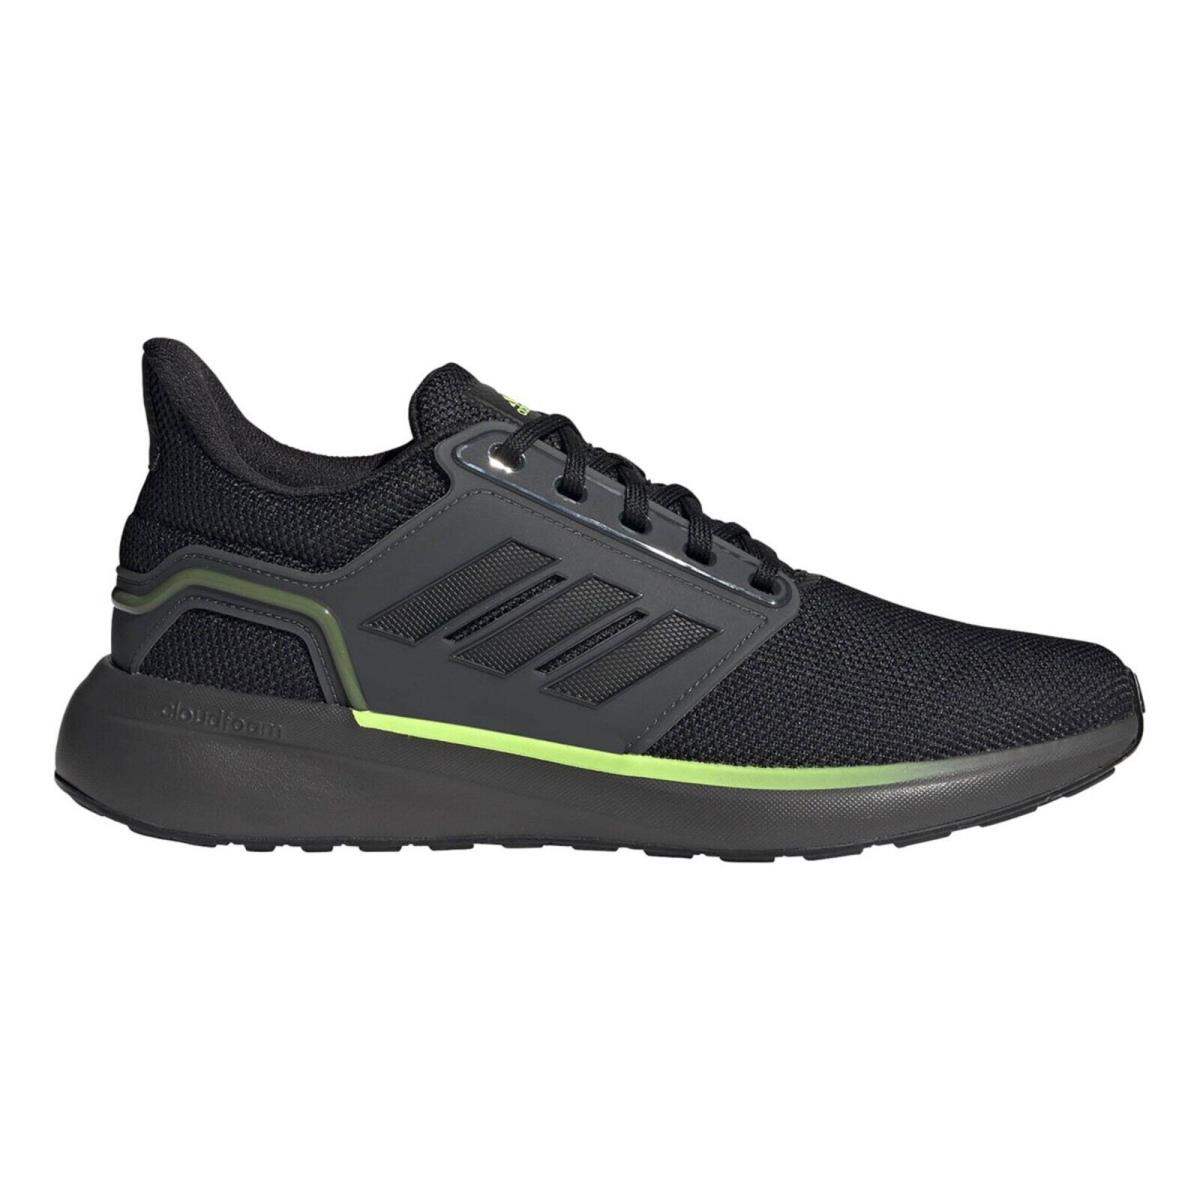 Adidas EQ19 Run Men Athletic Sneaker Trainer Running Shoe - Grey Six / Core Black / Signal Green